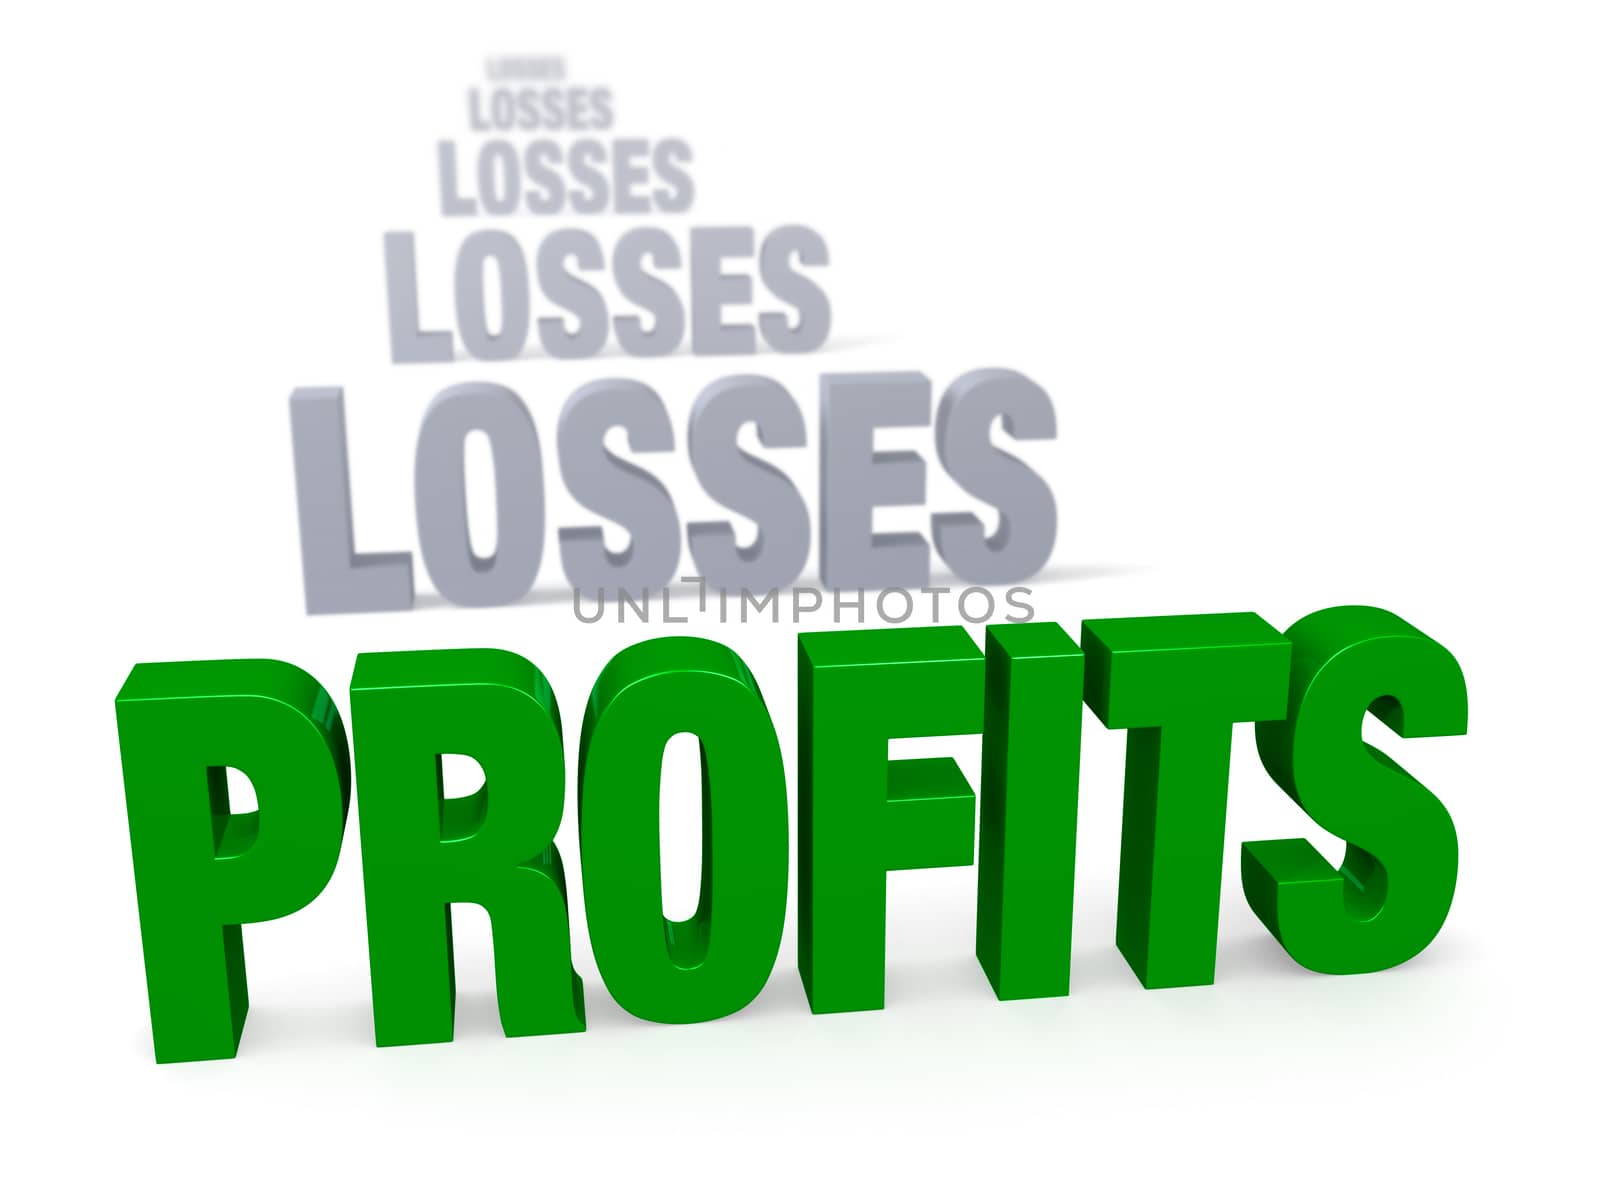 Profits After Losses by Em3